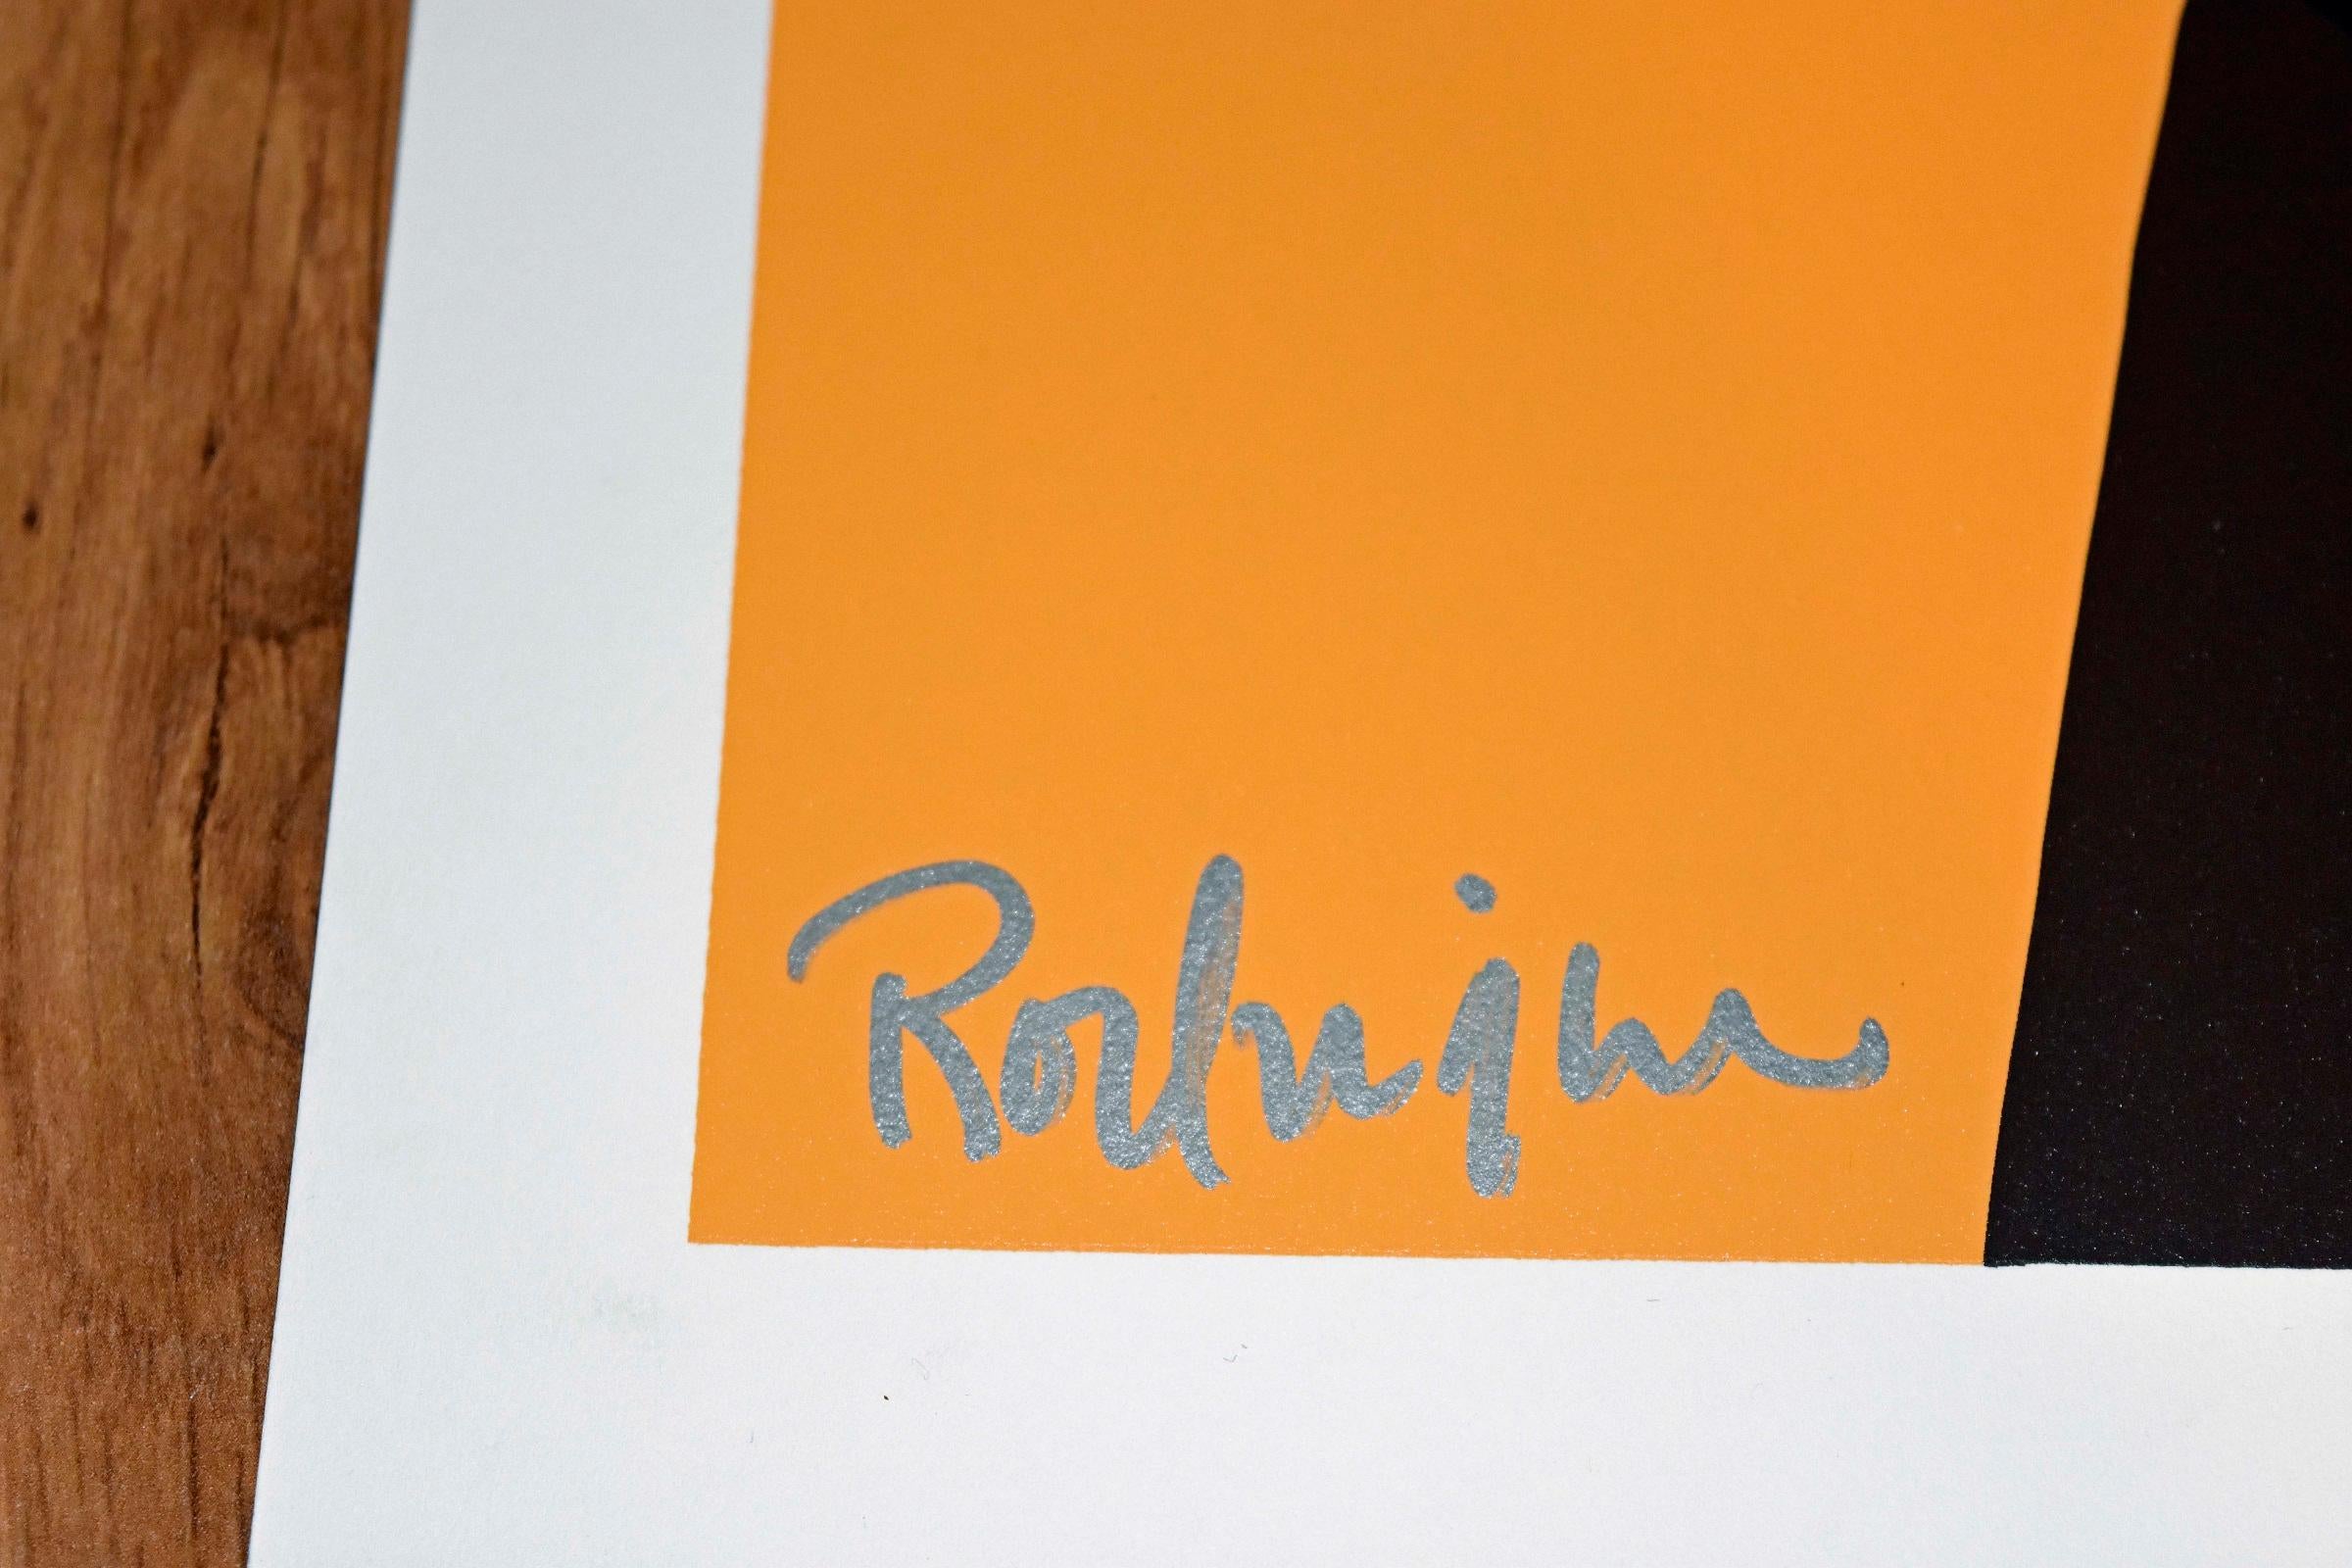 Artist:  George Rodrigue
Title:  Blue Dog “Bears a Resemblance Orange”
Medium:  Silkscreen 
Date:  1995
Edition:  50
Dimensions:  22 X 21”
Description:  Signed & Unframed  
Condition:  Excellent 
